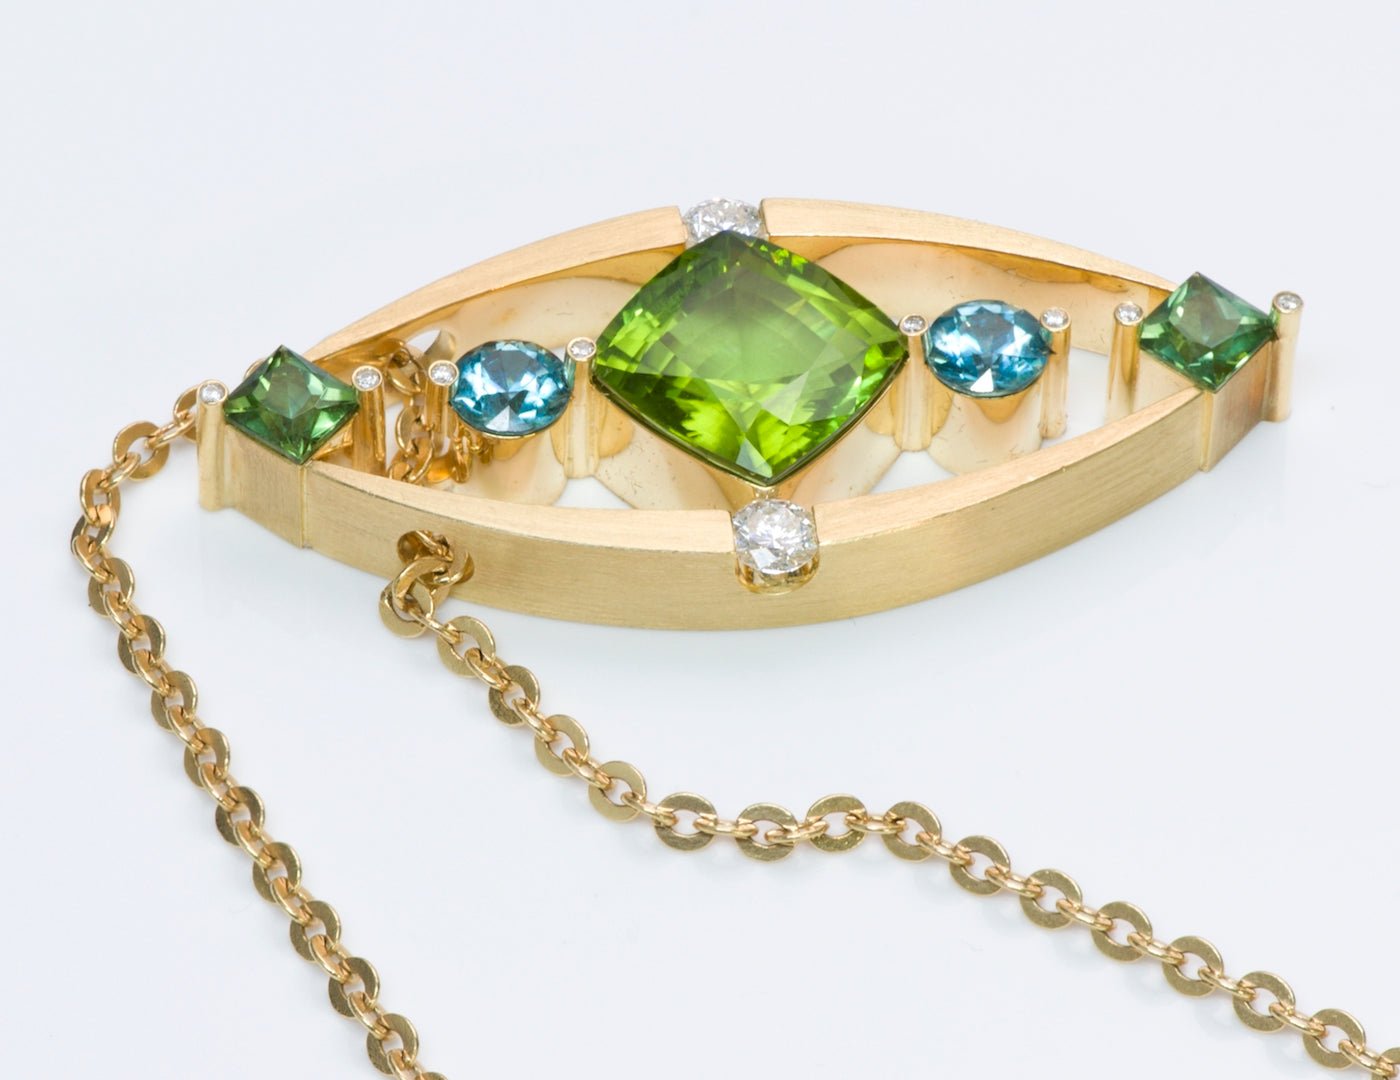 Troels D. Larsen Gold Gemstone Necklace